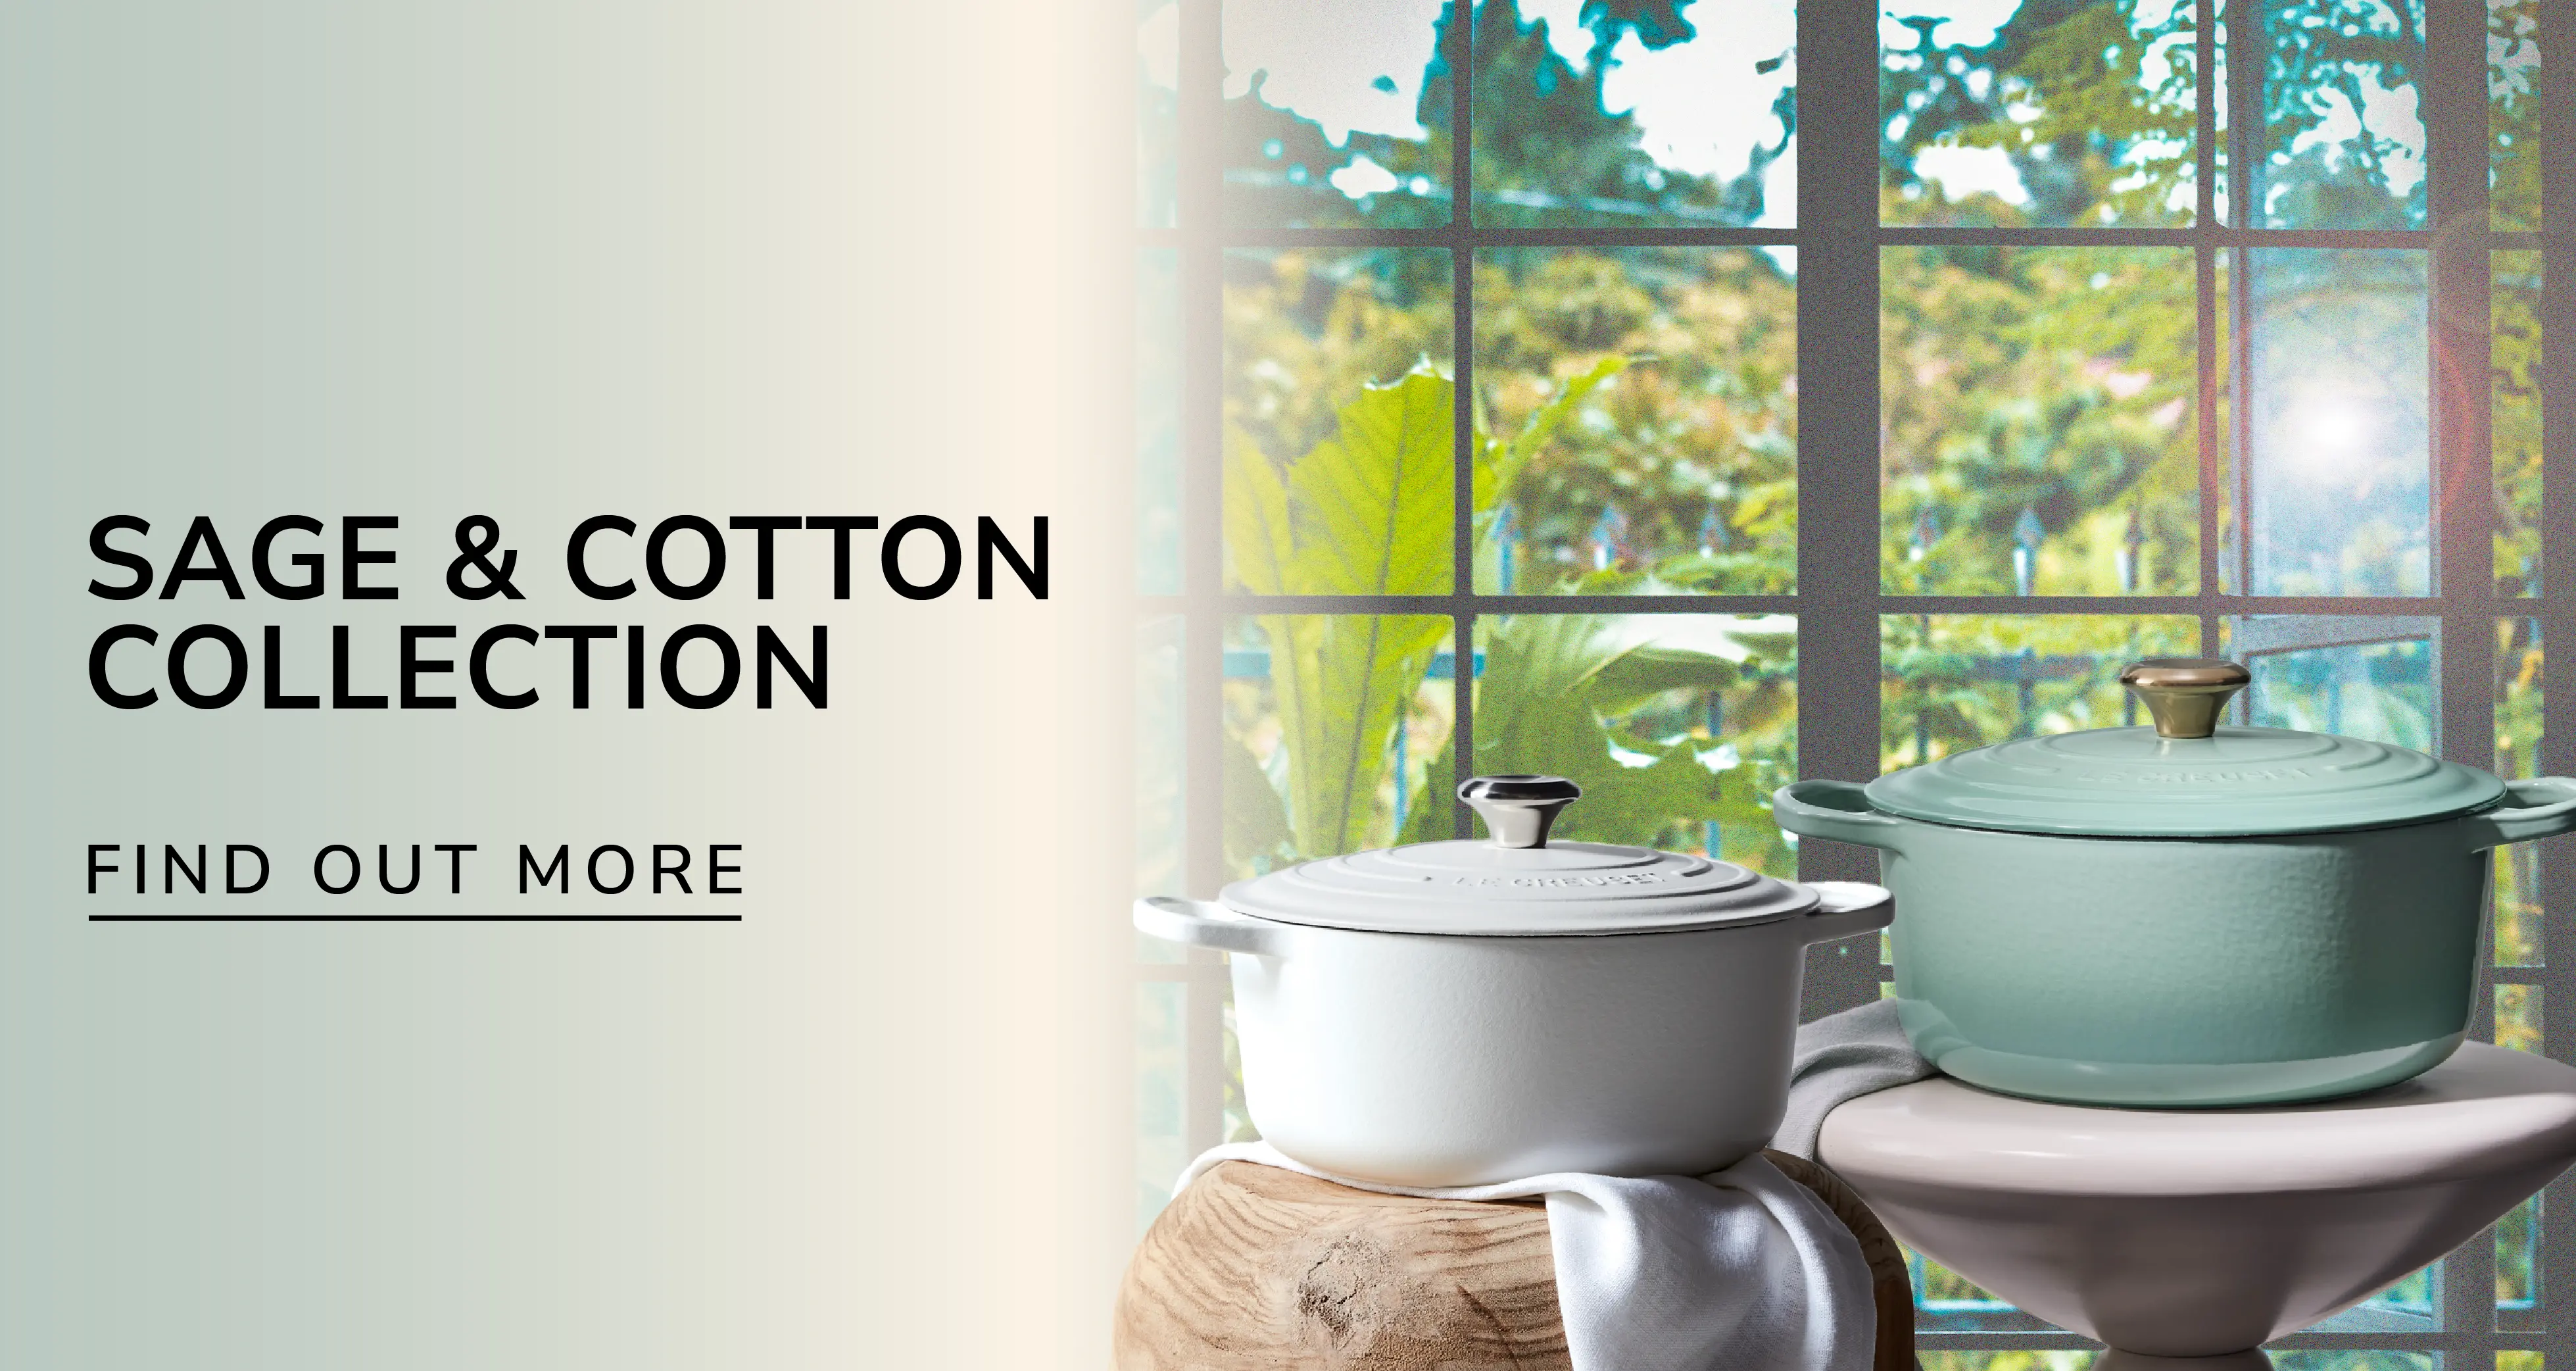 Cotton & Sage Collection